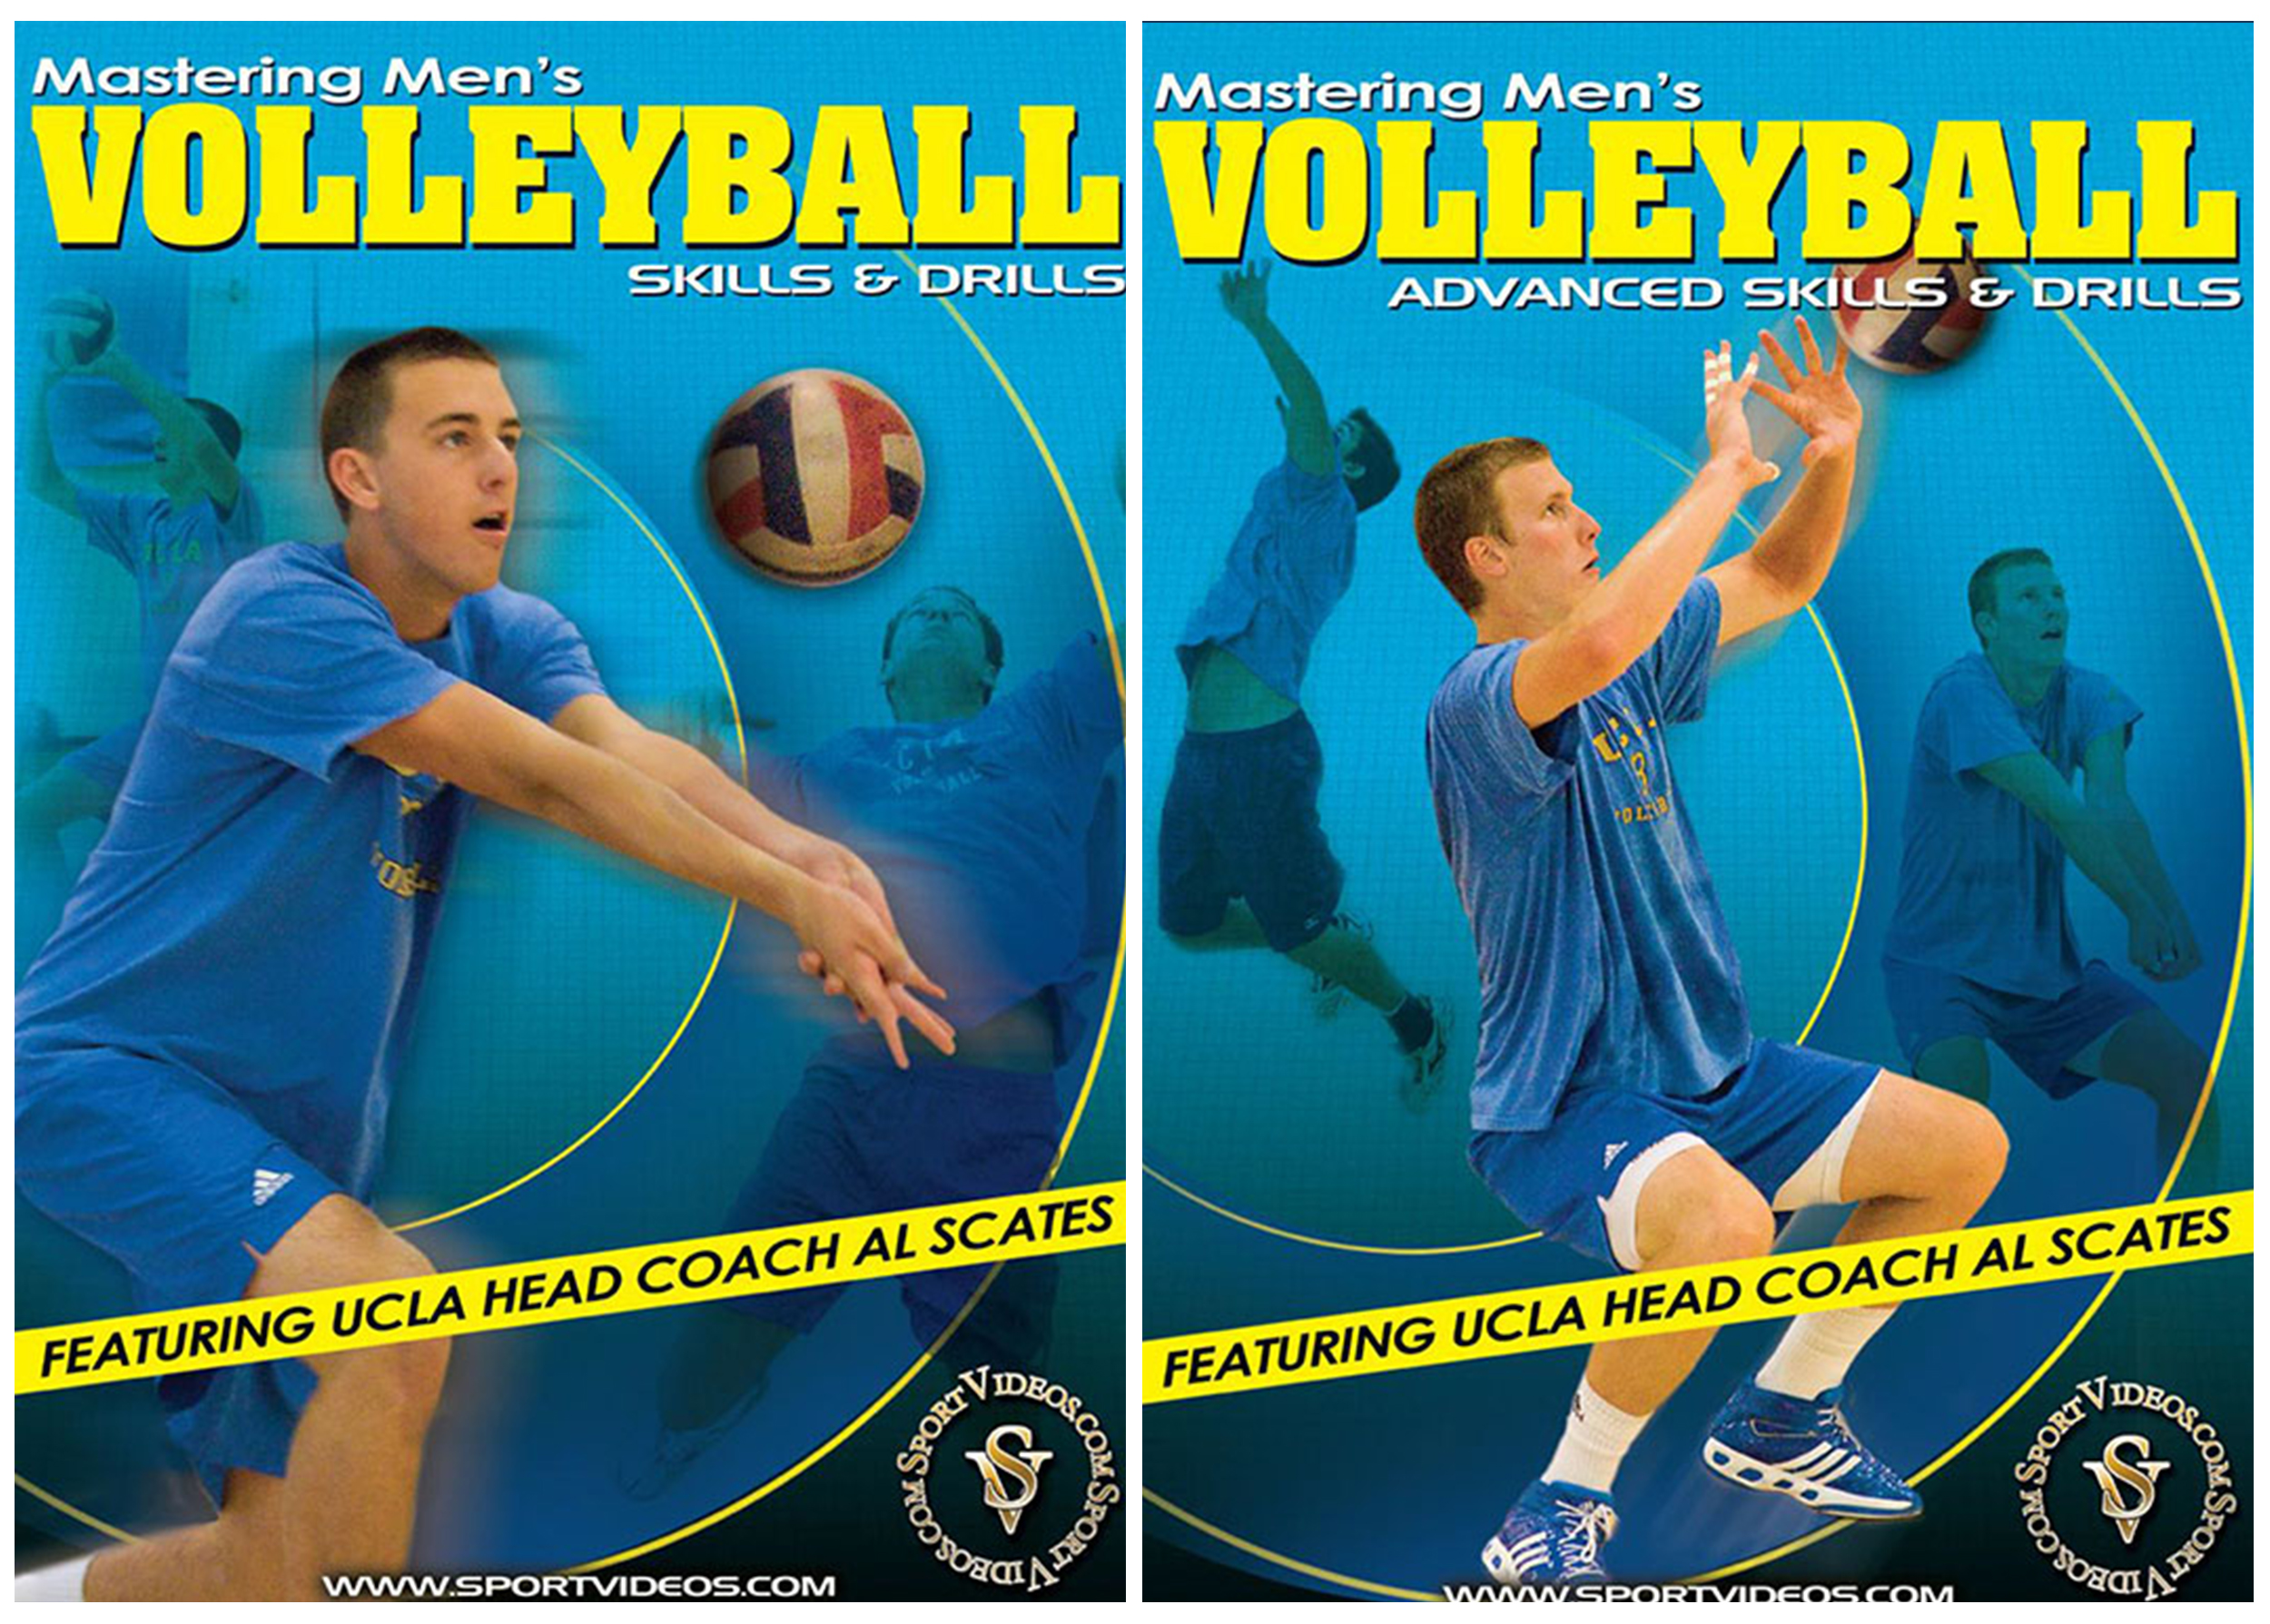 Mastering Men's Volleyball Skills and Drills 2 DVD Set